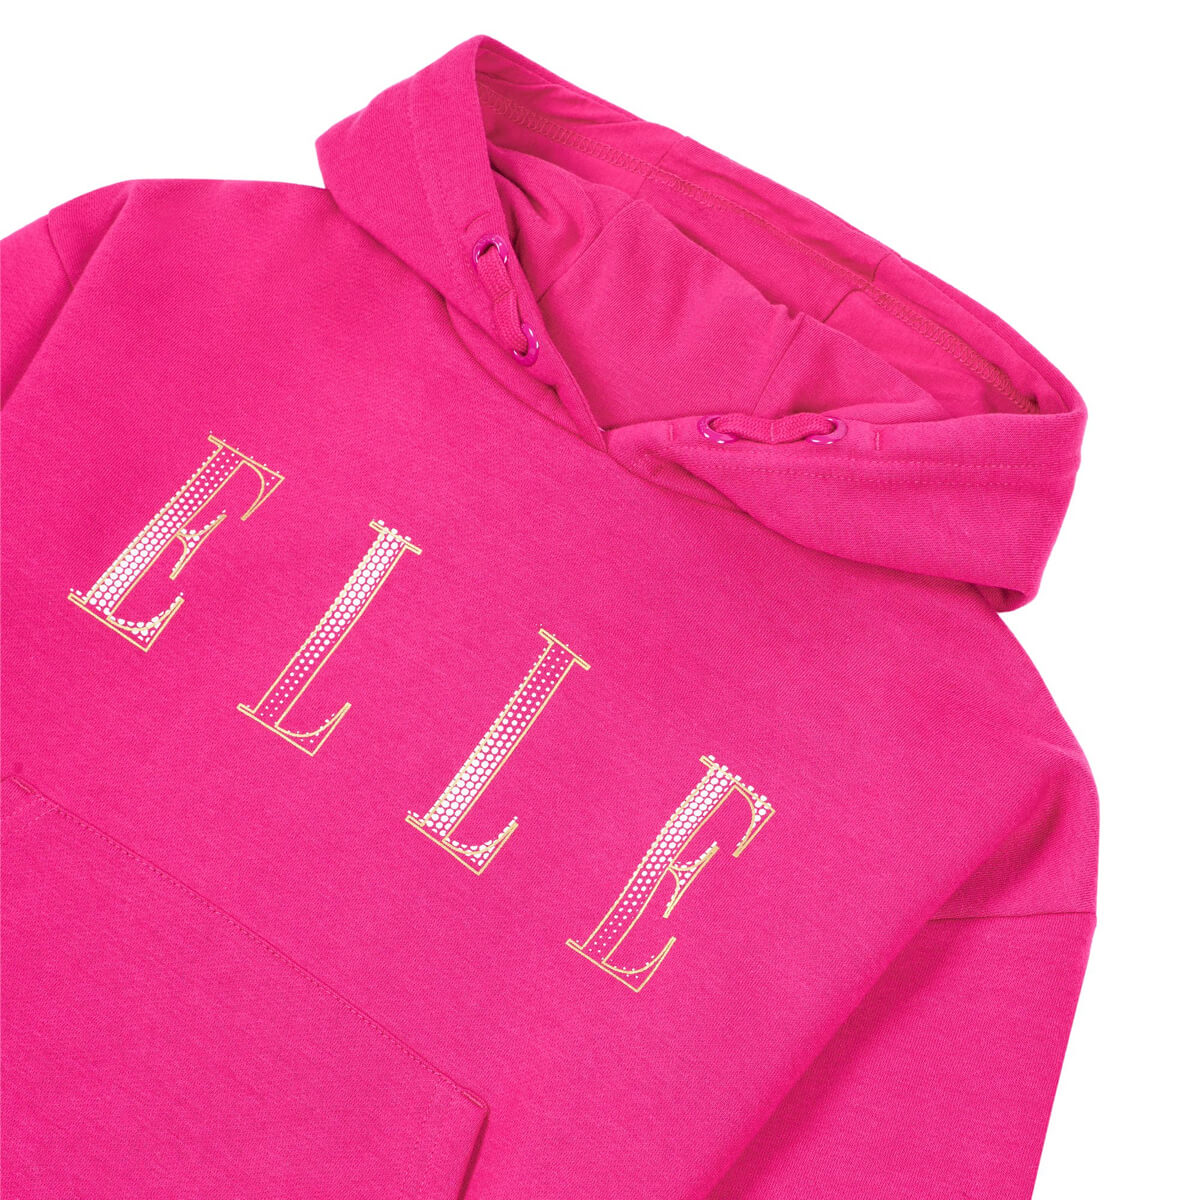 Elle Girls Berry Logo Oversize Hoodie